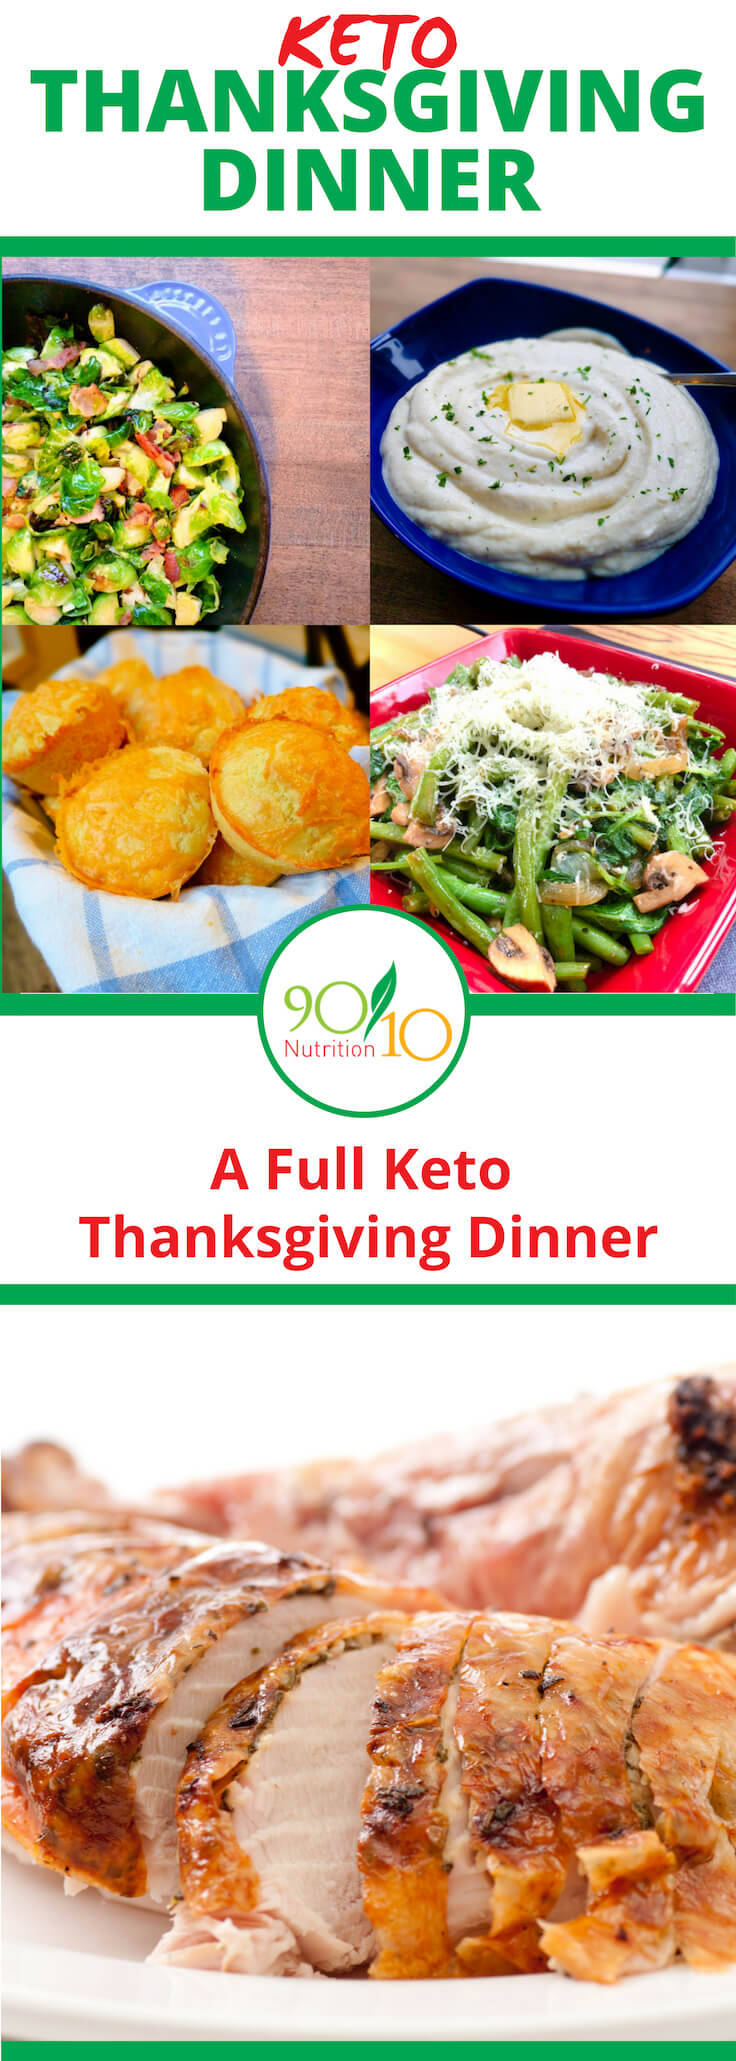 Keto Thanksgiving Dinner - Clean Eating - 90/10 Nutrition